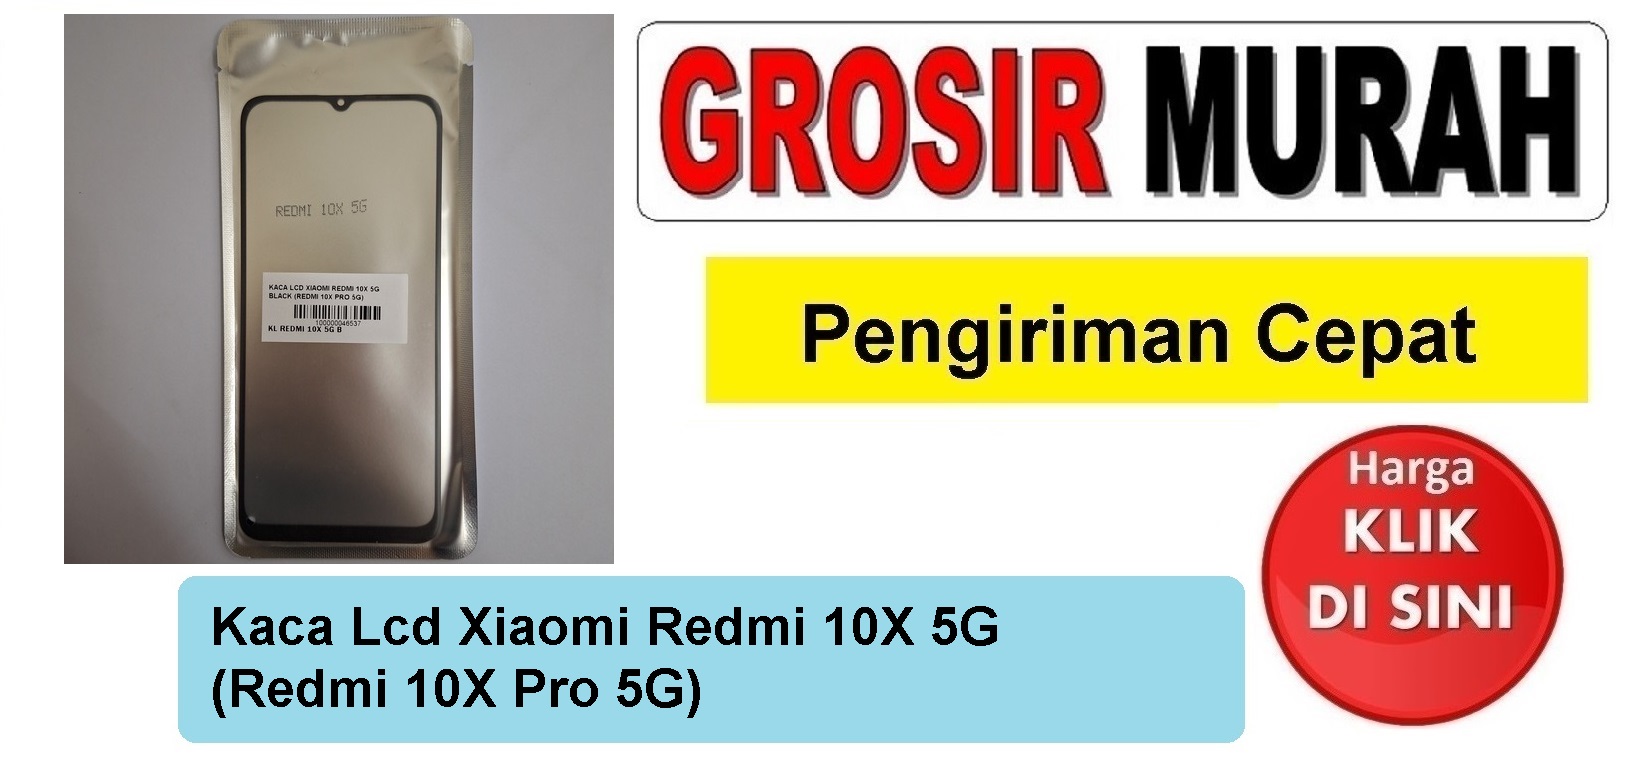 Pusat Penjualan Kaca Lcd Xiaomi Redmi 10X 5G (Redmi 10X Pro 5G) Glass Oca Kaca Depan Layar Digitizer Panel Spare Part hp Grosir